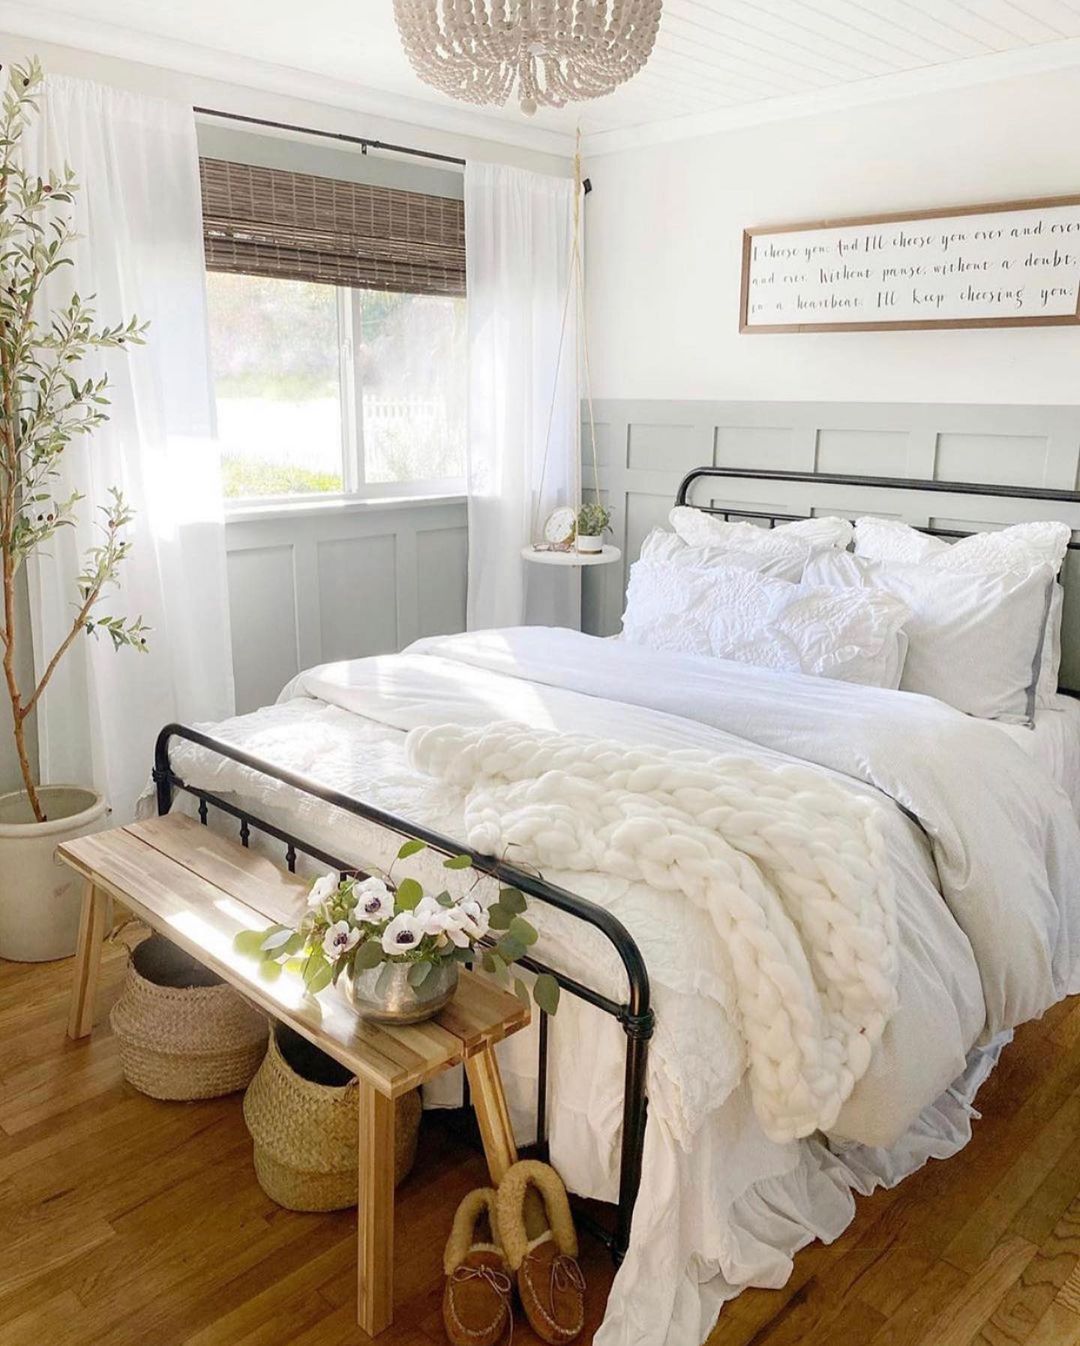 Bedroom Designed by Dreaming of Homemaking. Photo by Instagram user @dreamingofhomemaking